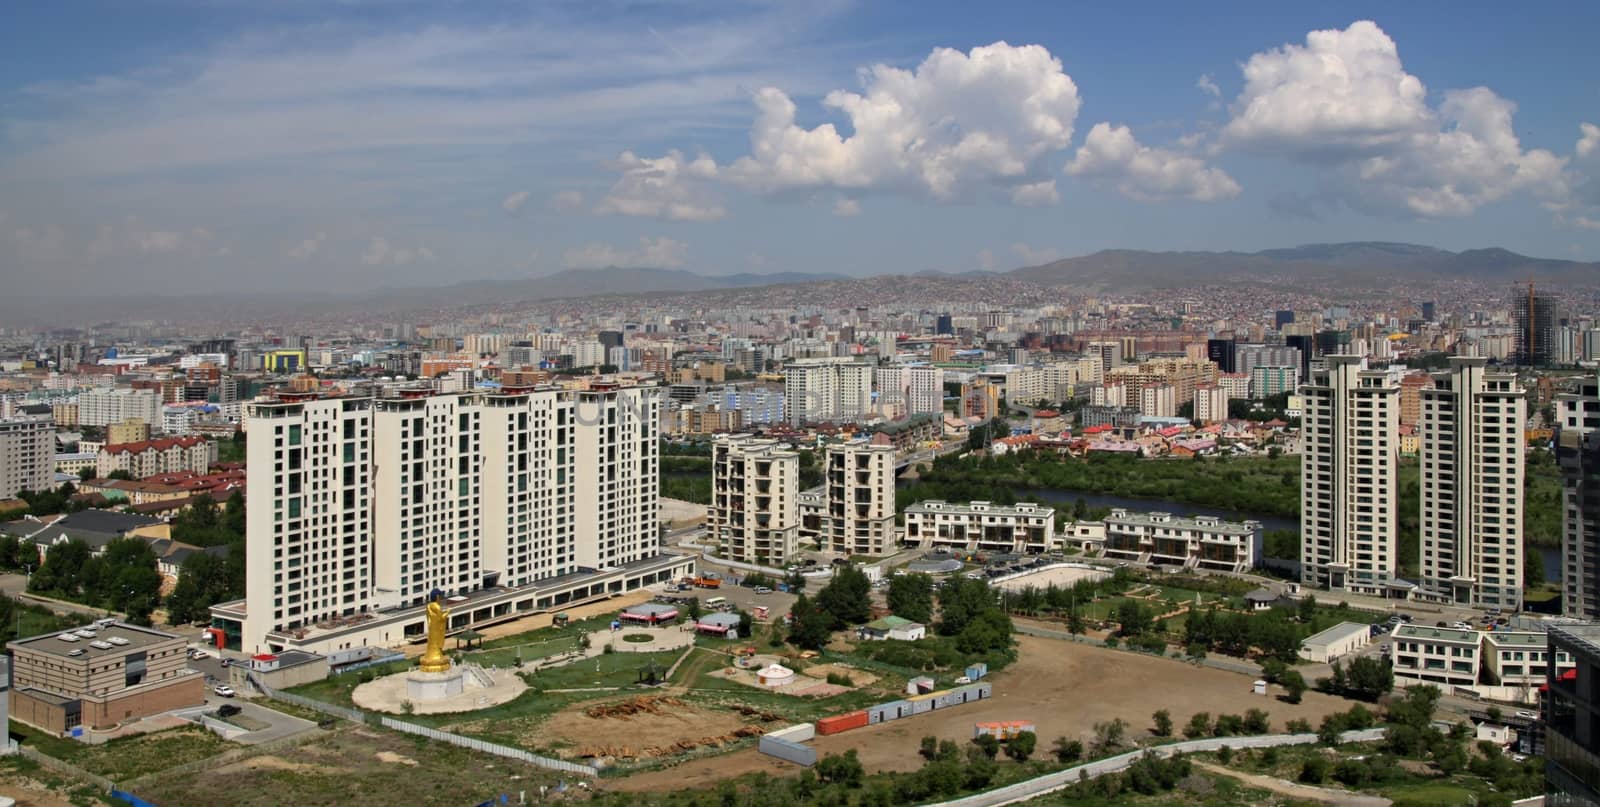 New  buildings in the capital city Ulaanbaatar,Mongolia by jnerad